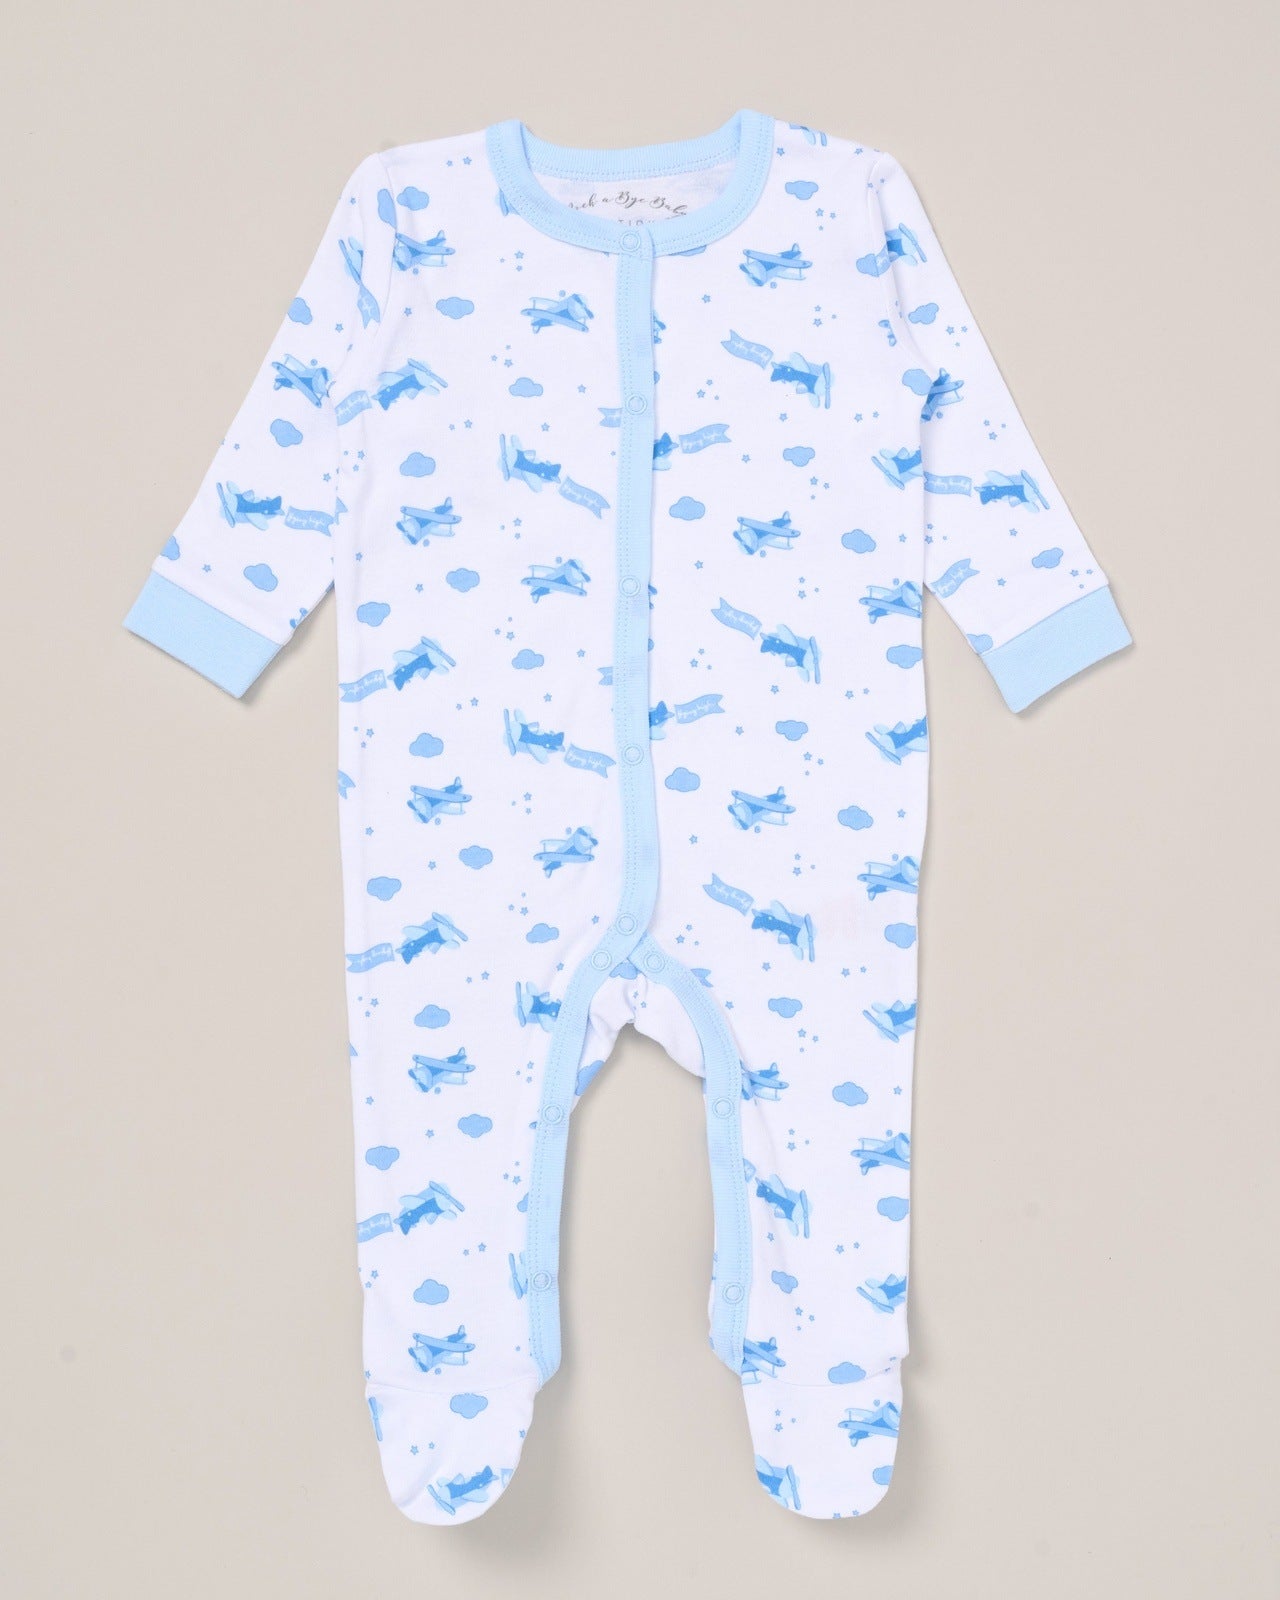 Jainco Baby Boy 5 Piece Multi Print Layette Set - Blue 2 Shaws Department Stores